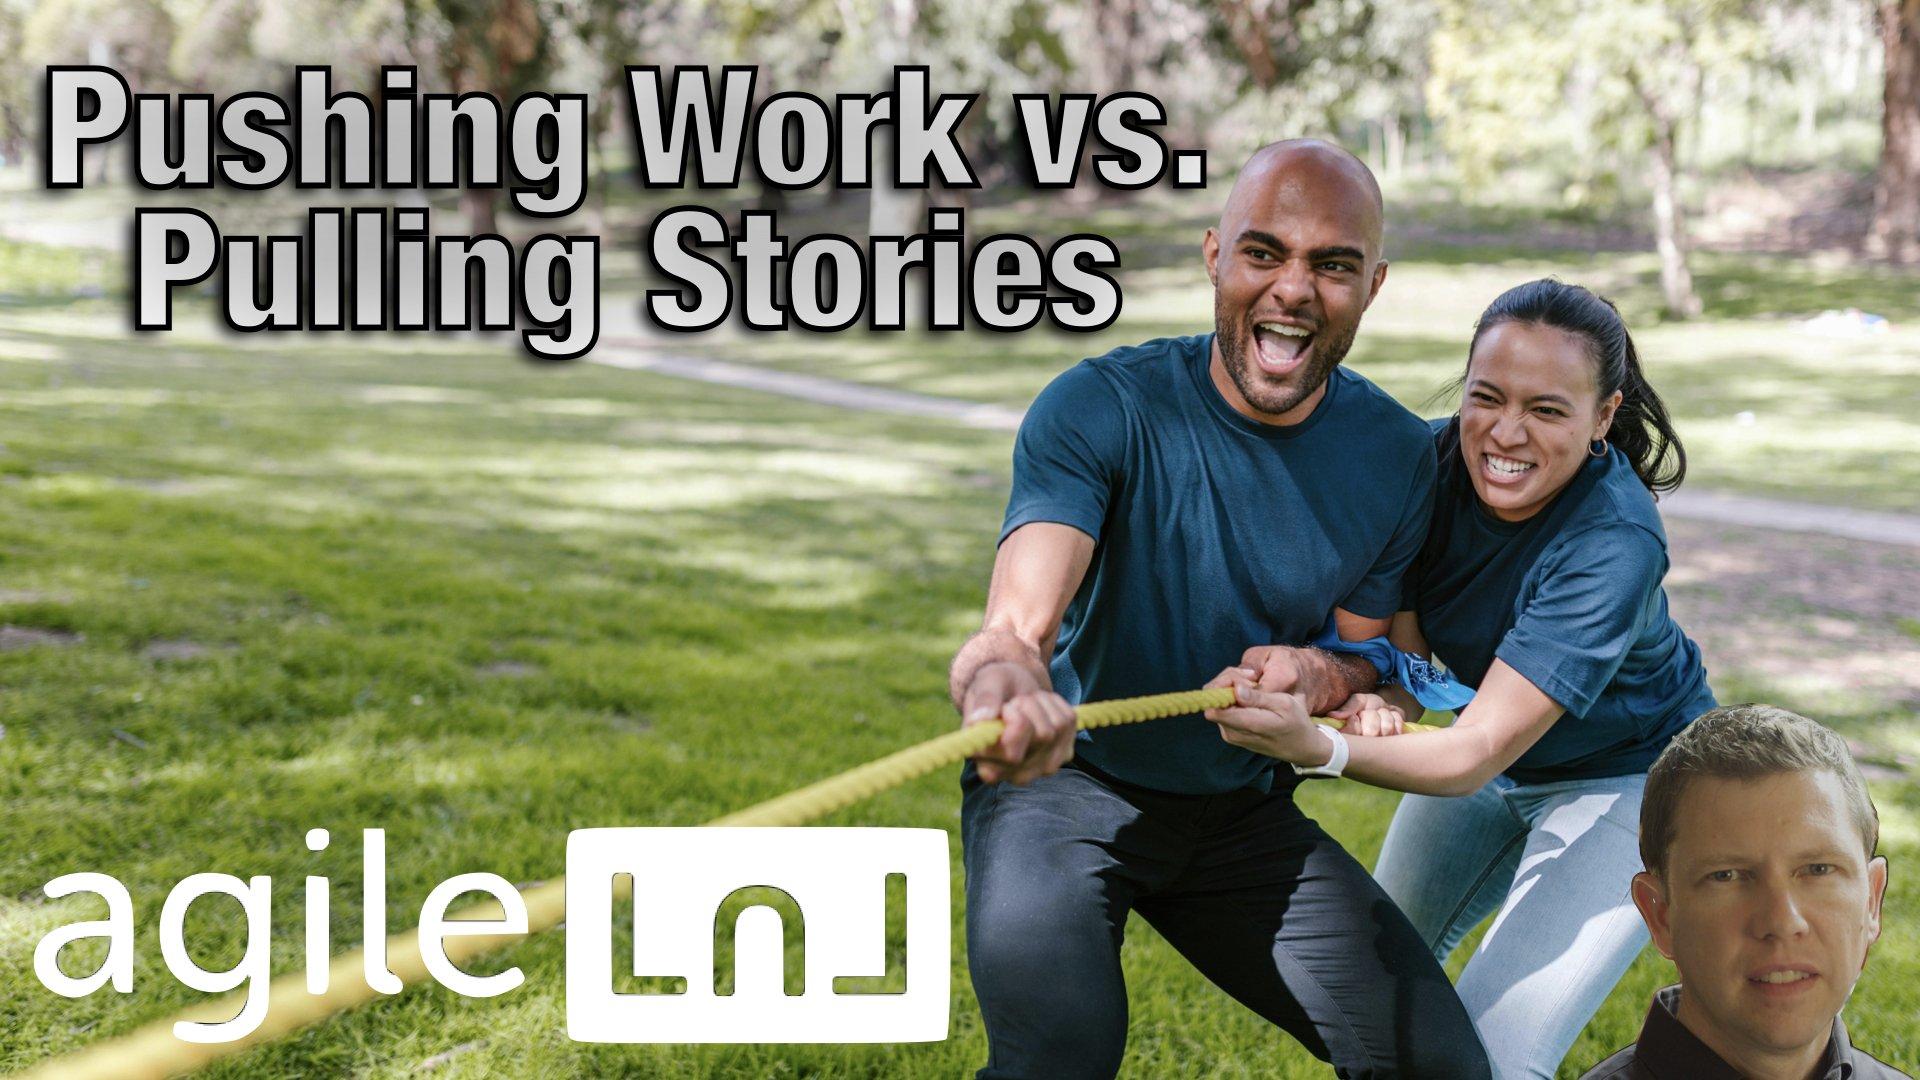 Pulling Stories vs. Pushing Work - AgileLnL